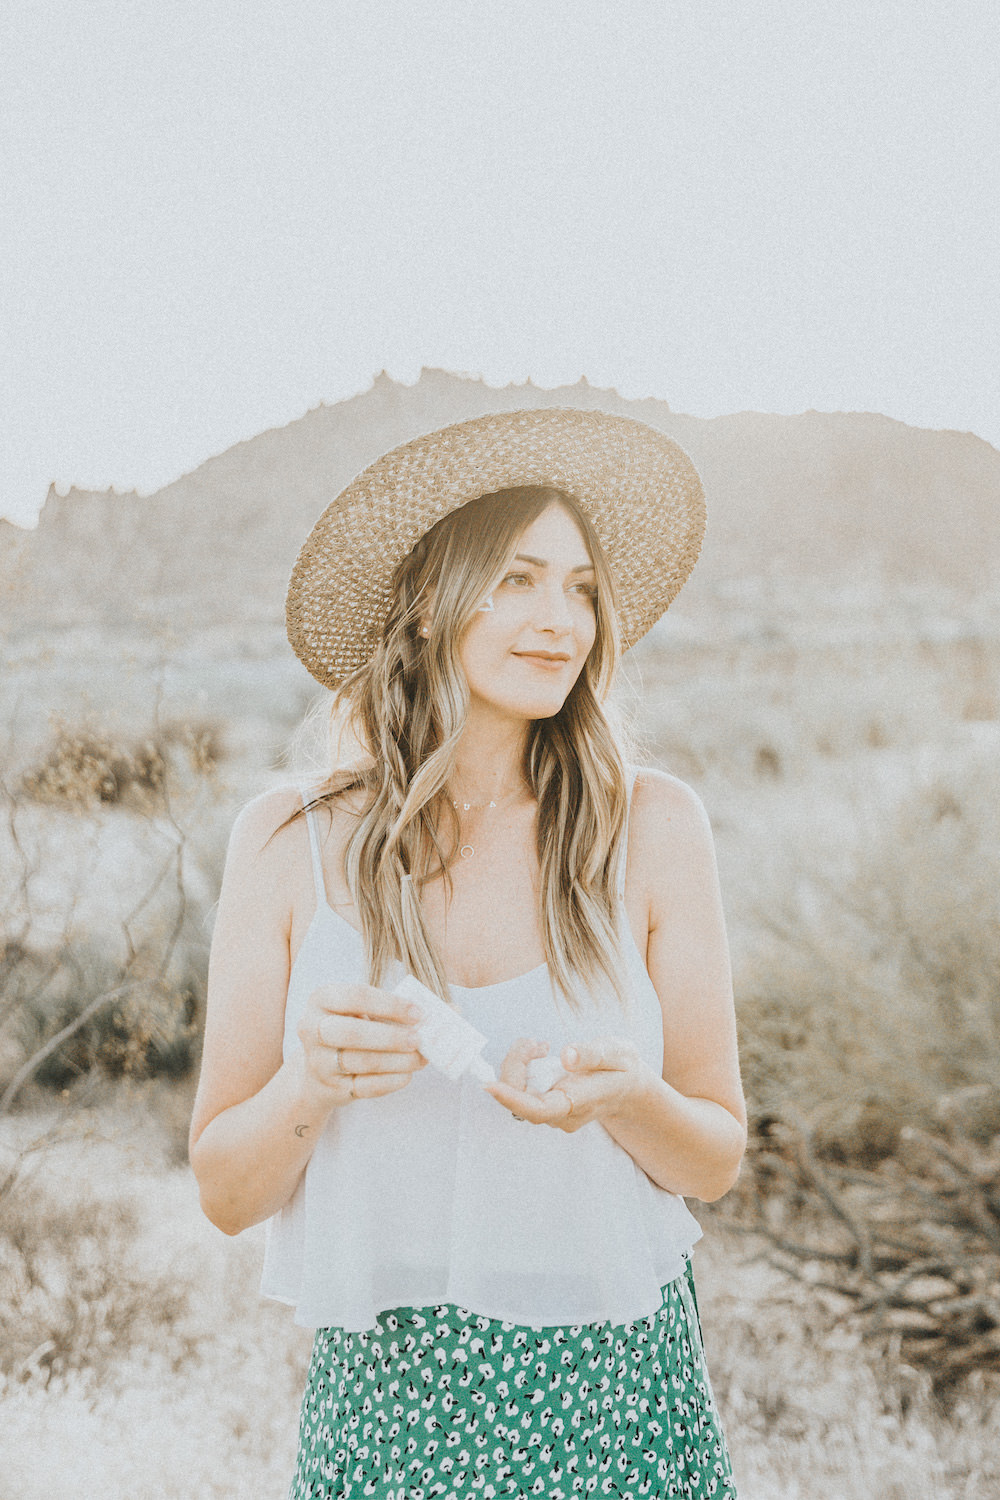 Dash of Darling | Arizona fashion and beauty blog Dash of Darling sharing Clarins Sunscreen